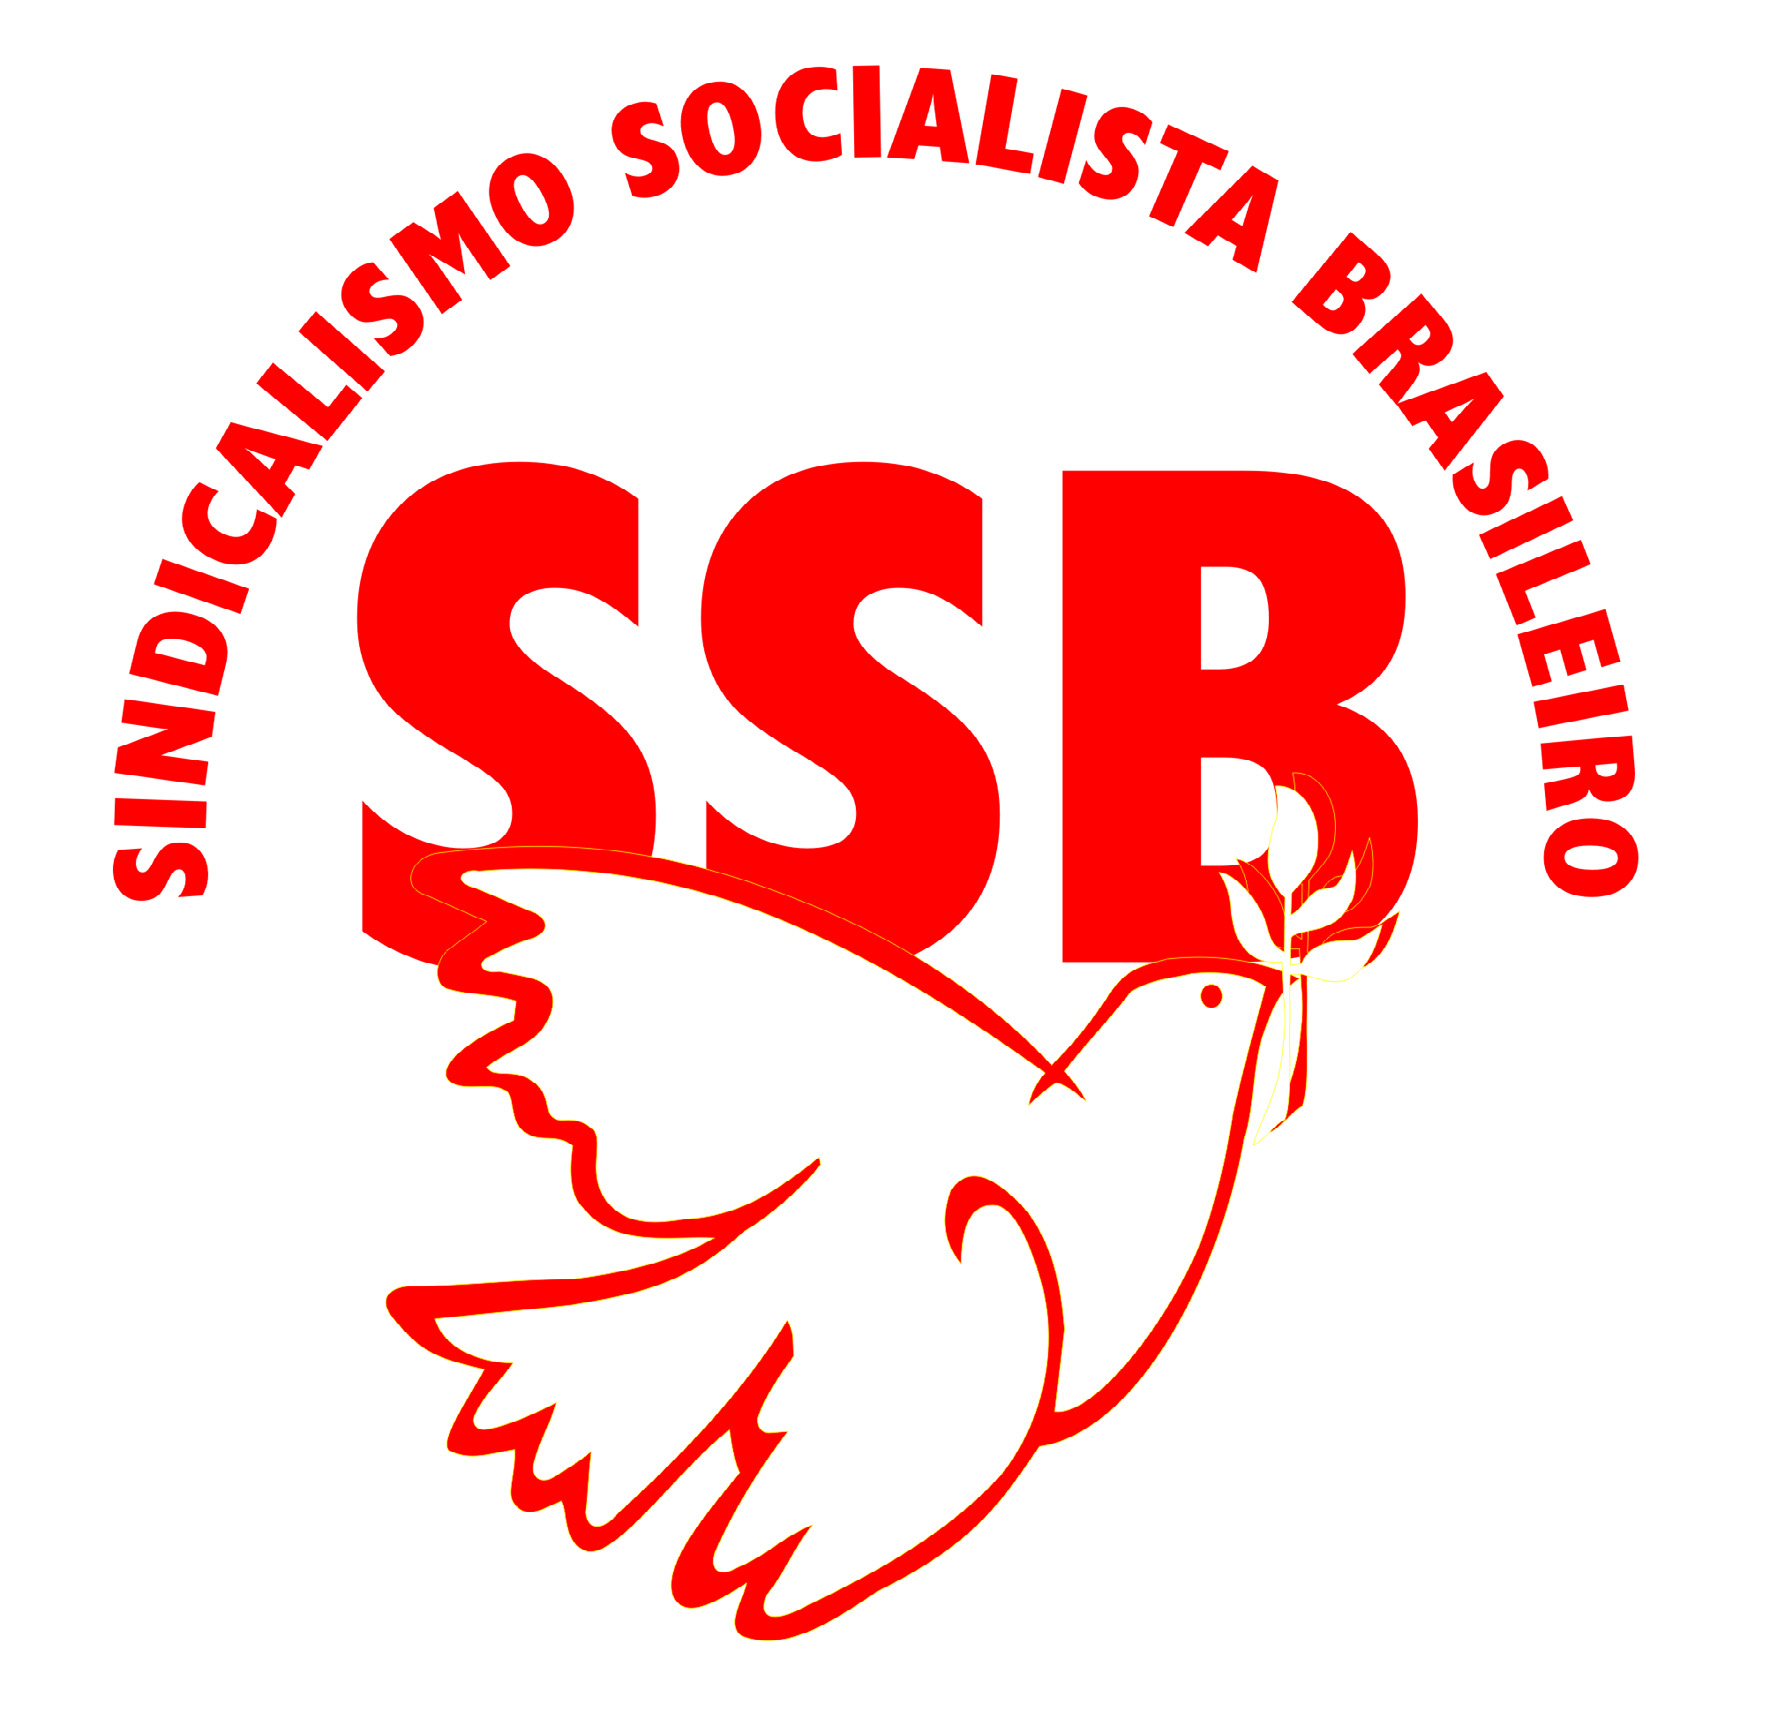 1.8 MARCA SINDICALISMO SOCIALISTA